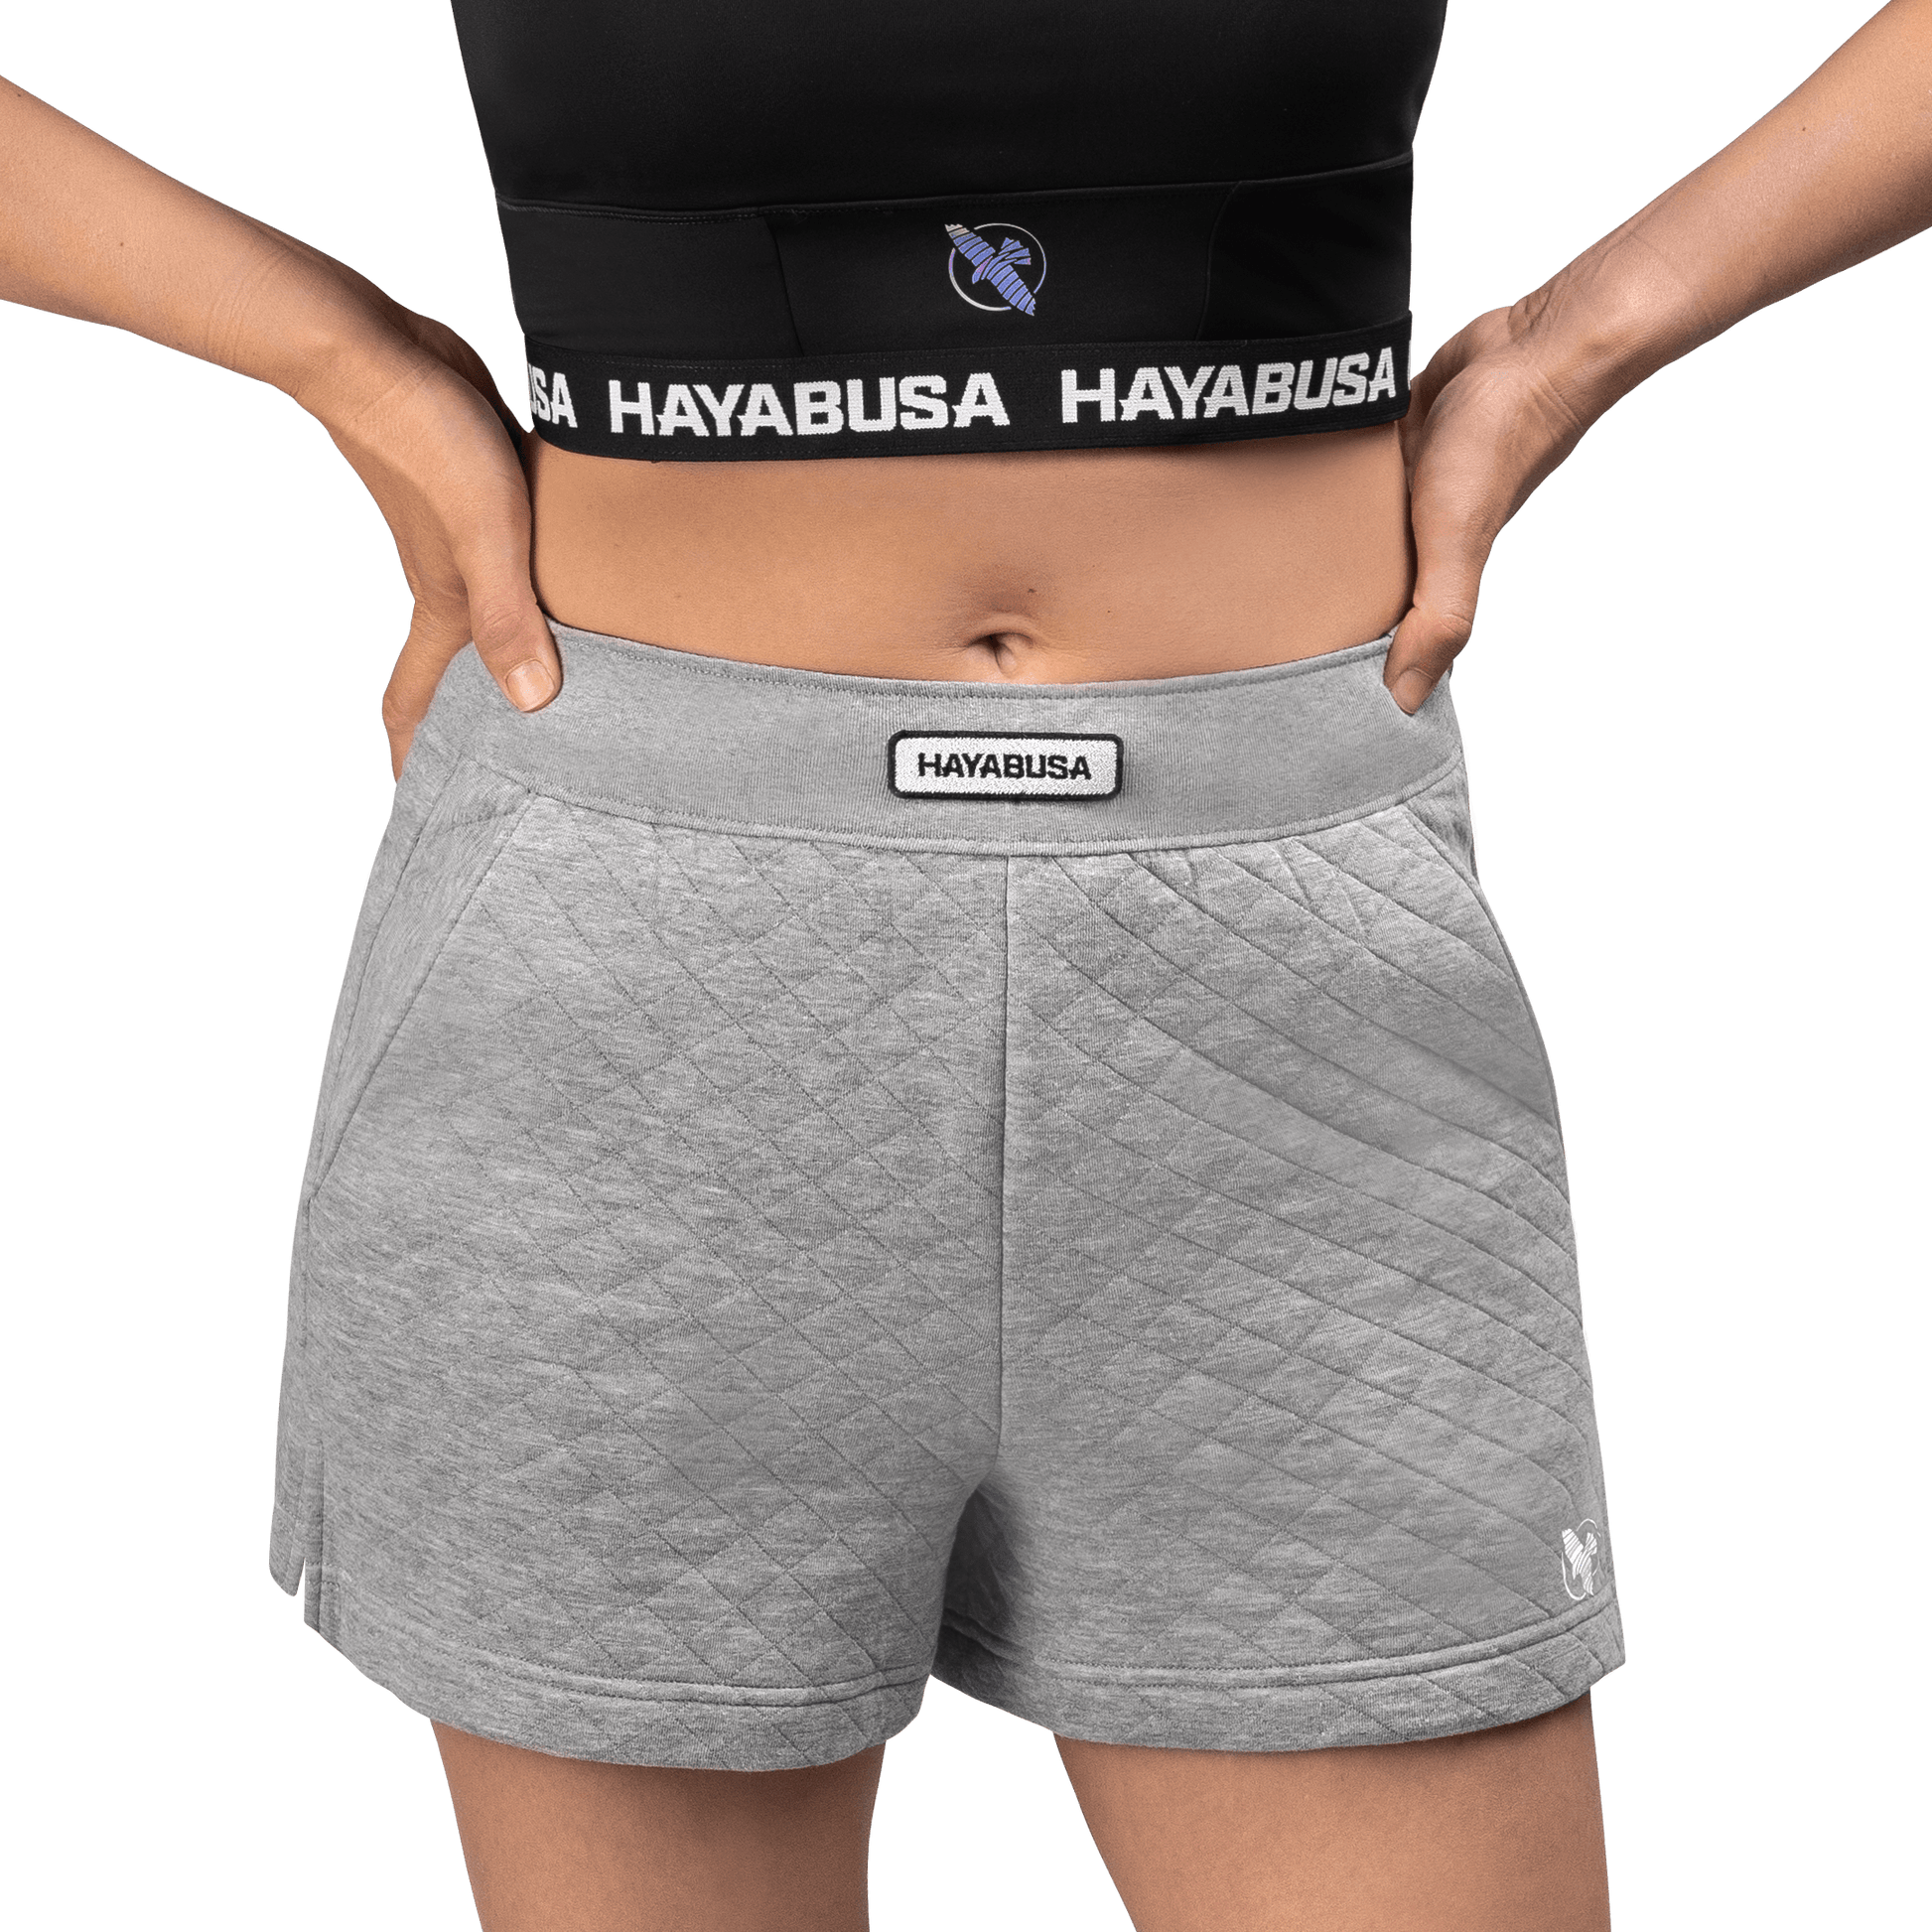 Hayabusa Womens Quilted Training Shorts - Violent Art Shop